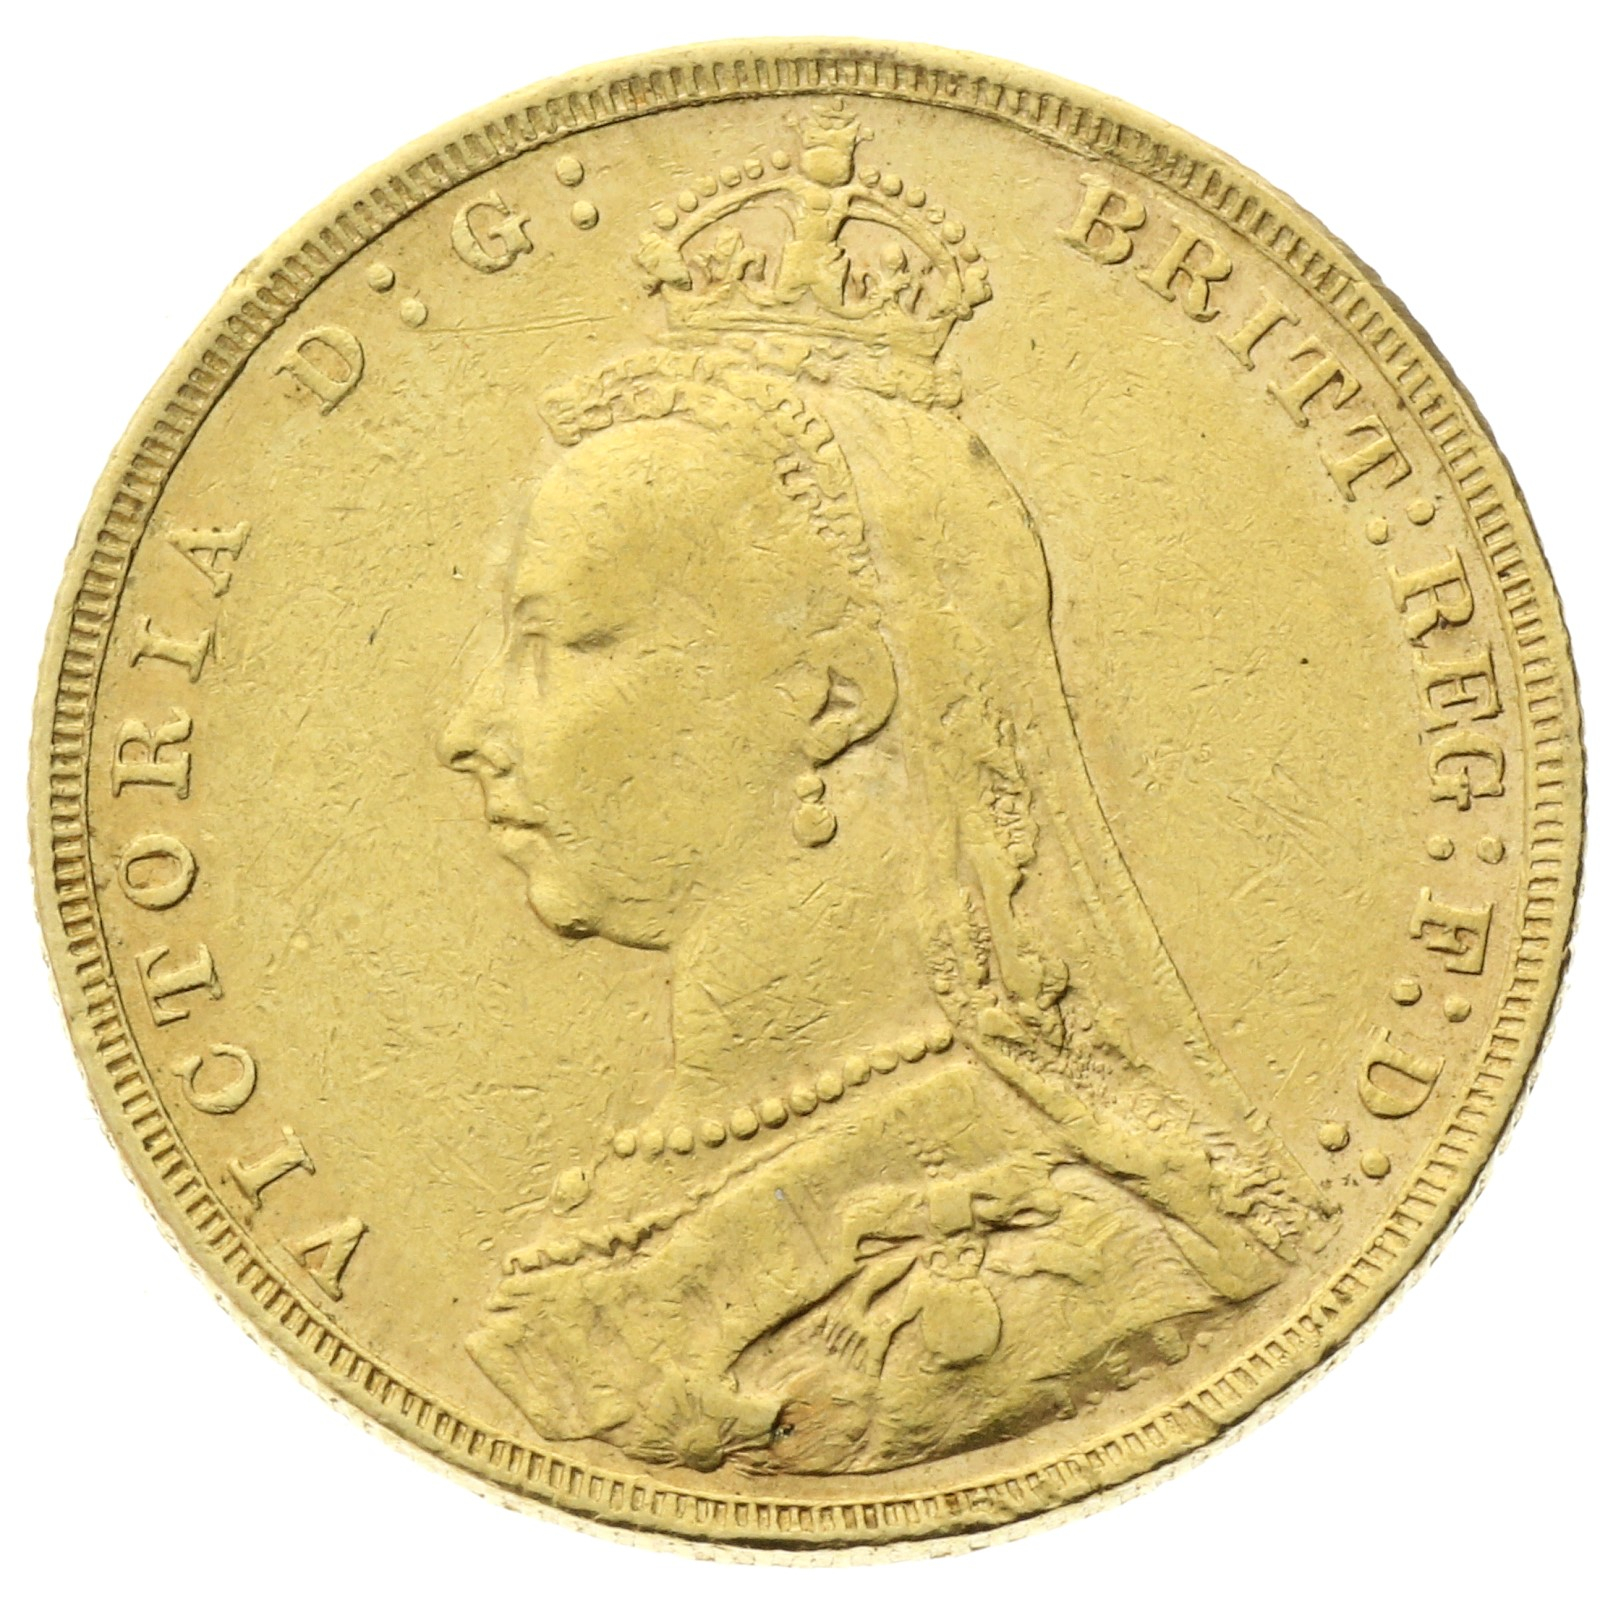 United Kingdom - 1 sovereign - 1890